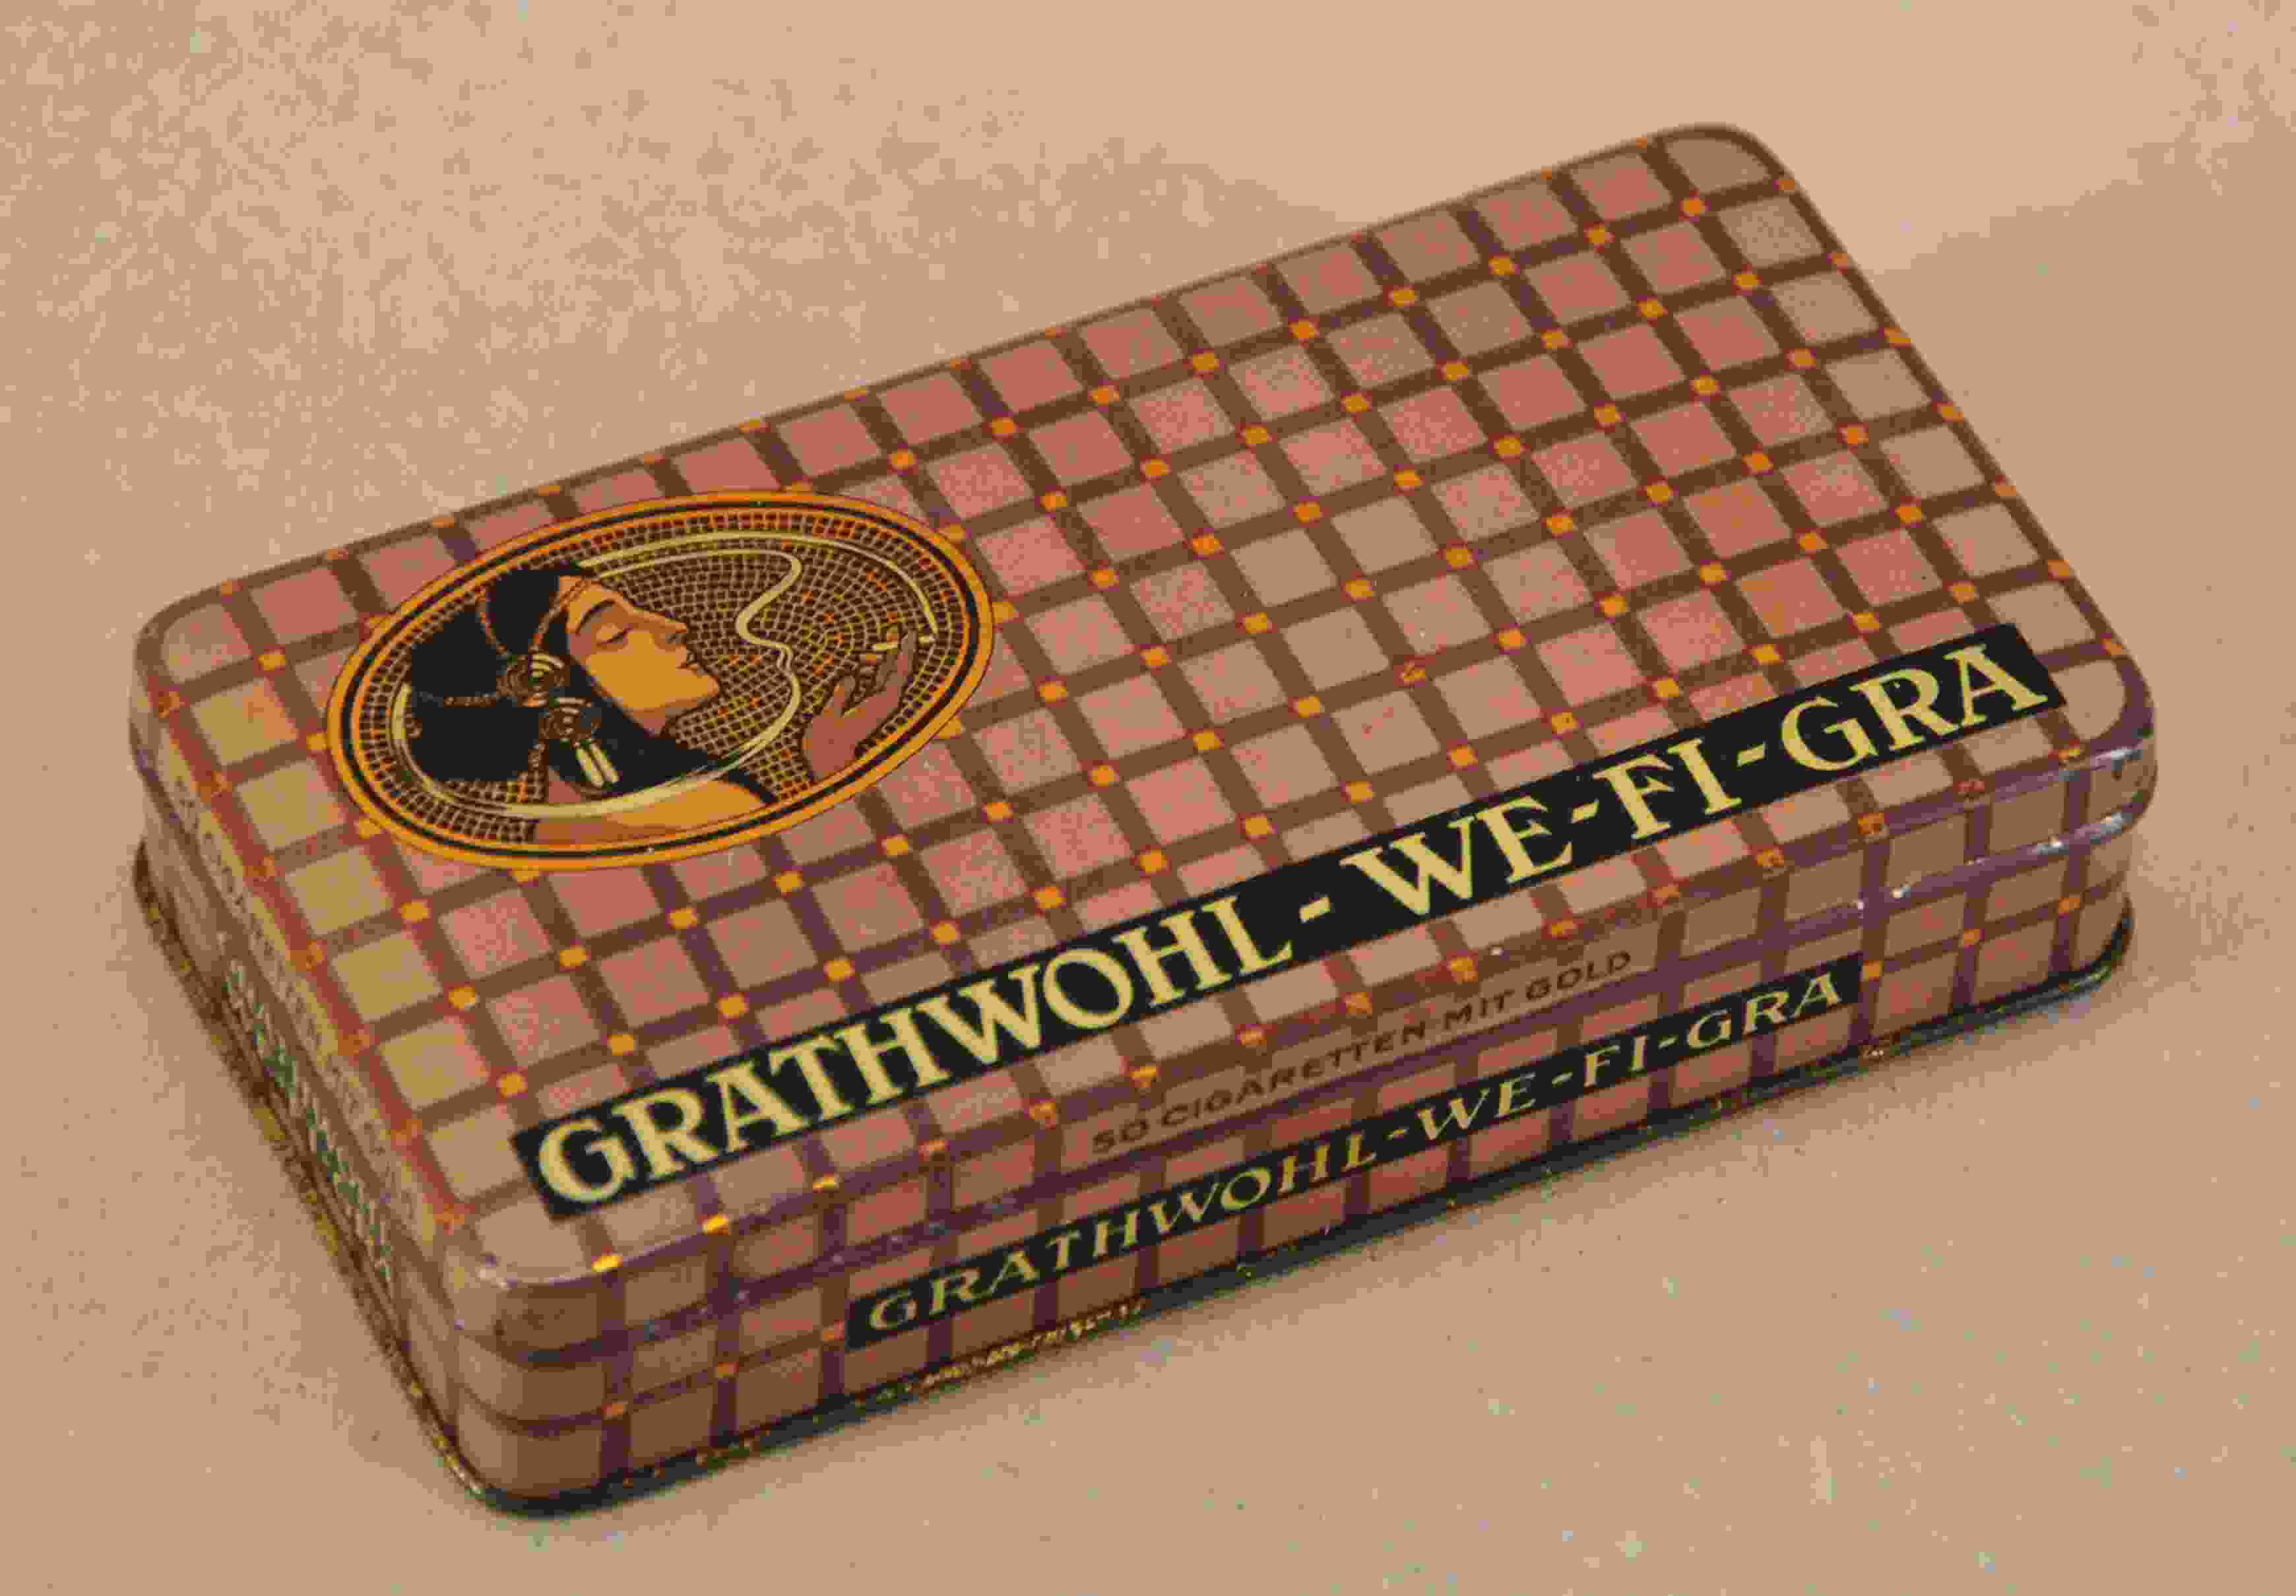 Grathwohl-We-Fi-Gra 50 Zigaretten 